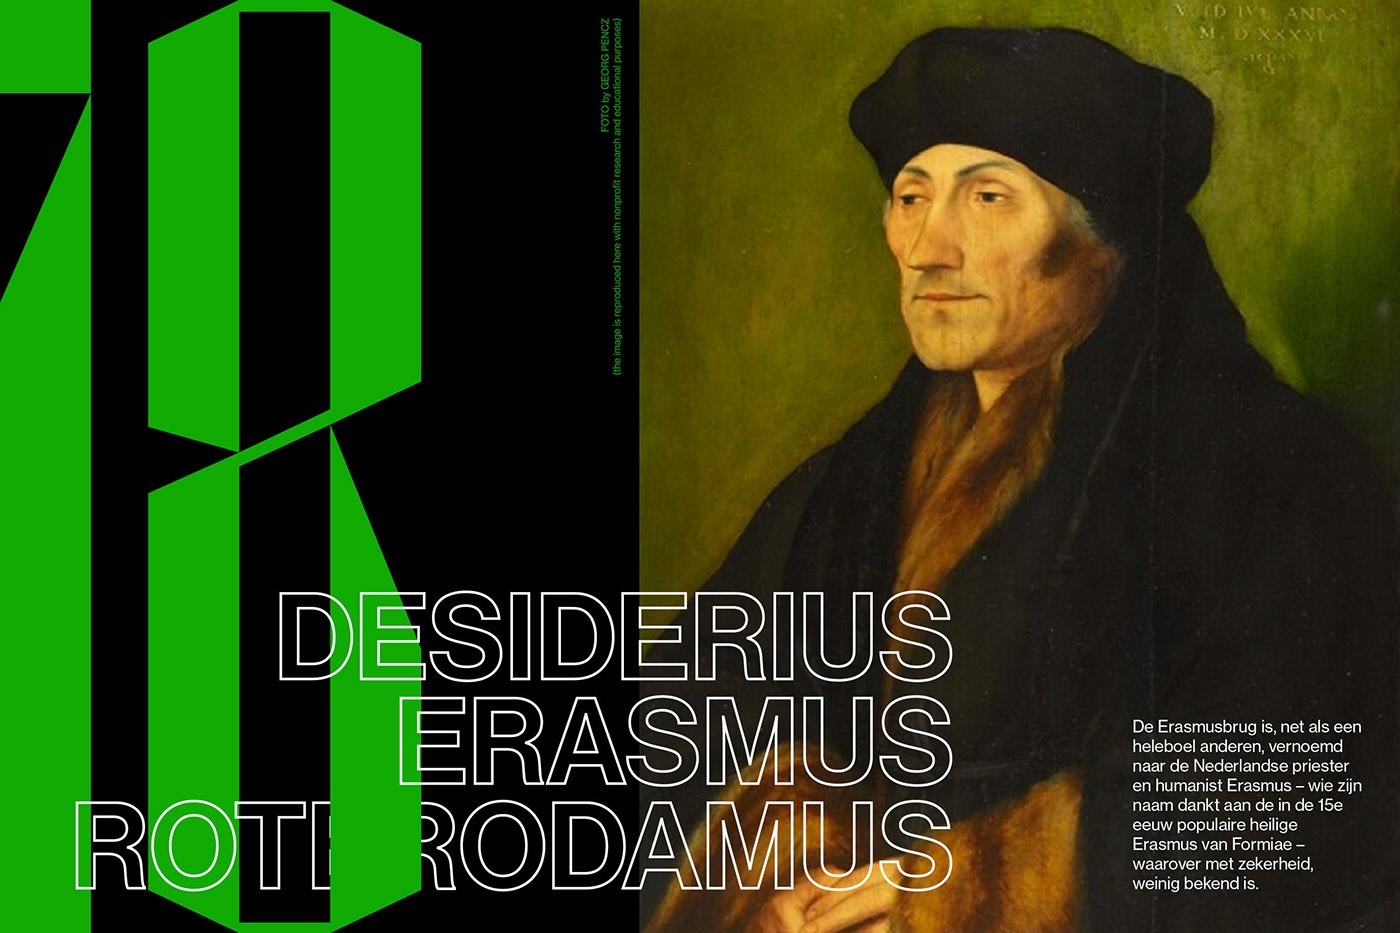 Erasmusbrug25